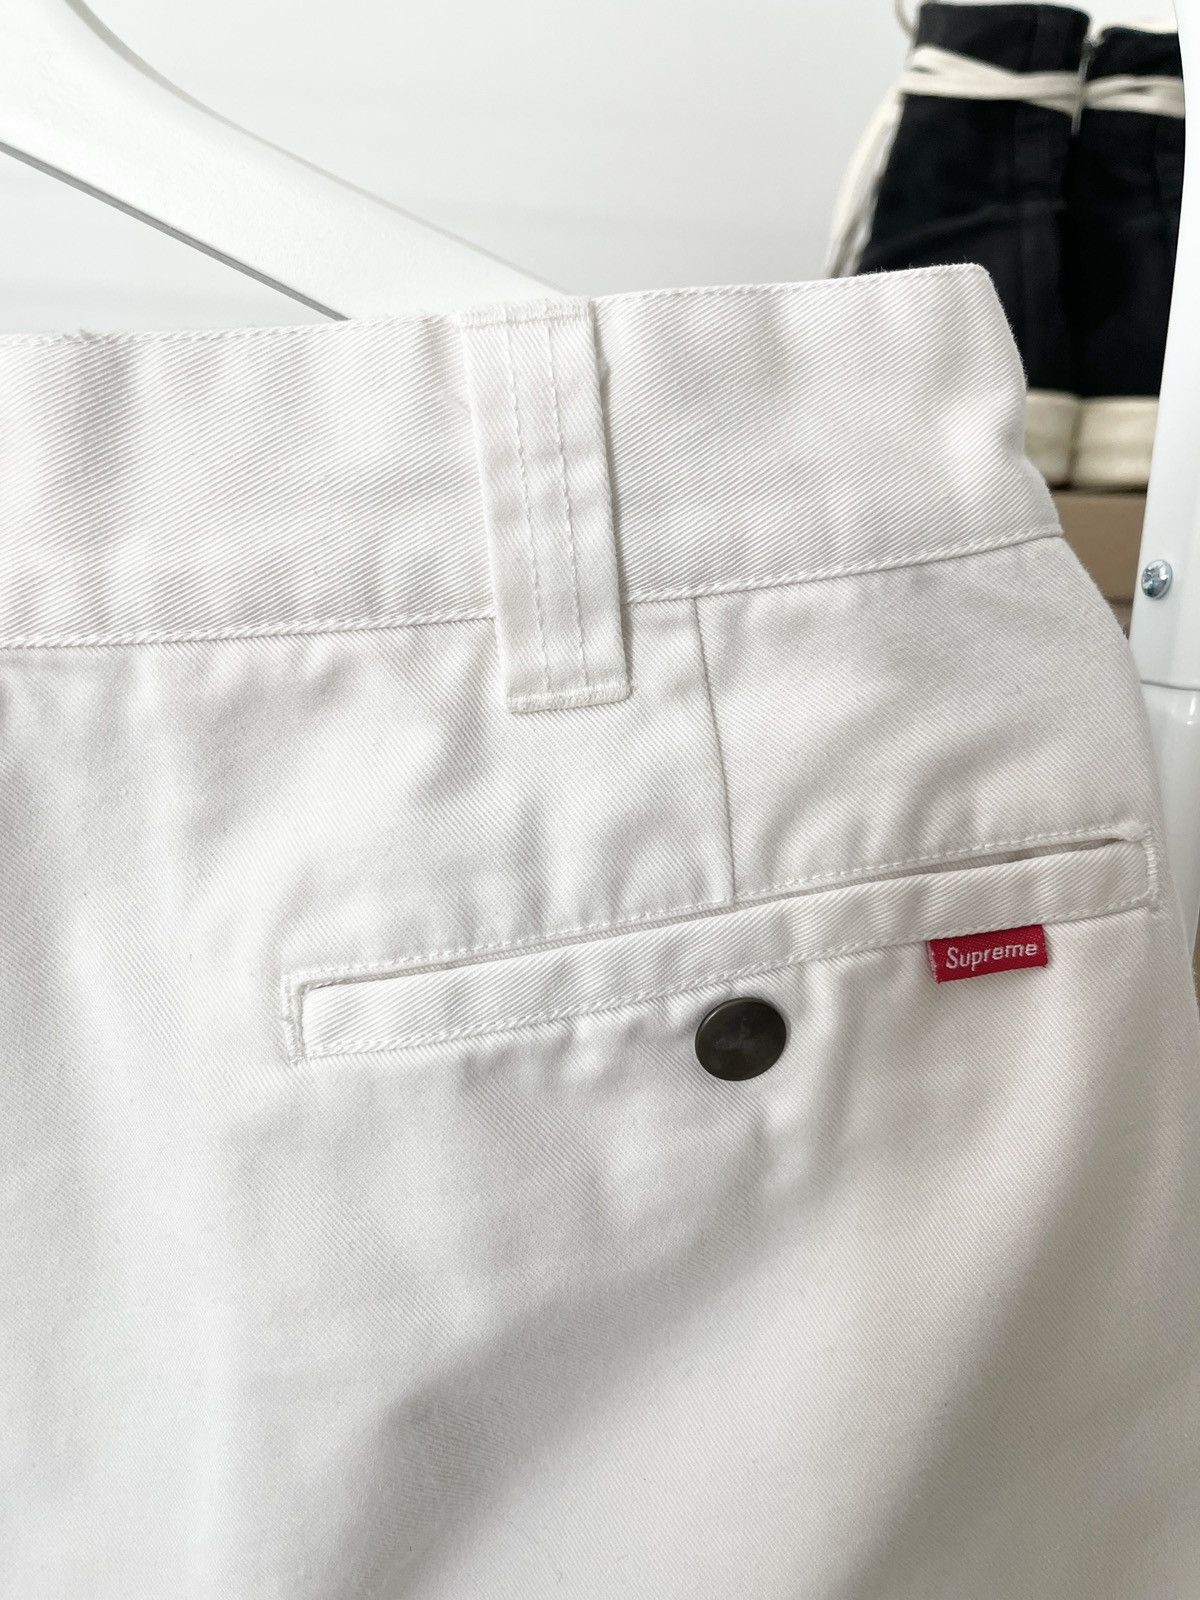 2020 Supreme x Daniel Johnston Embroidered Pants - 6